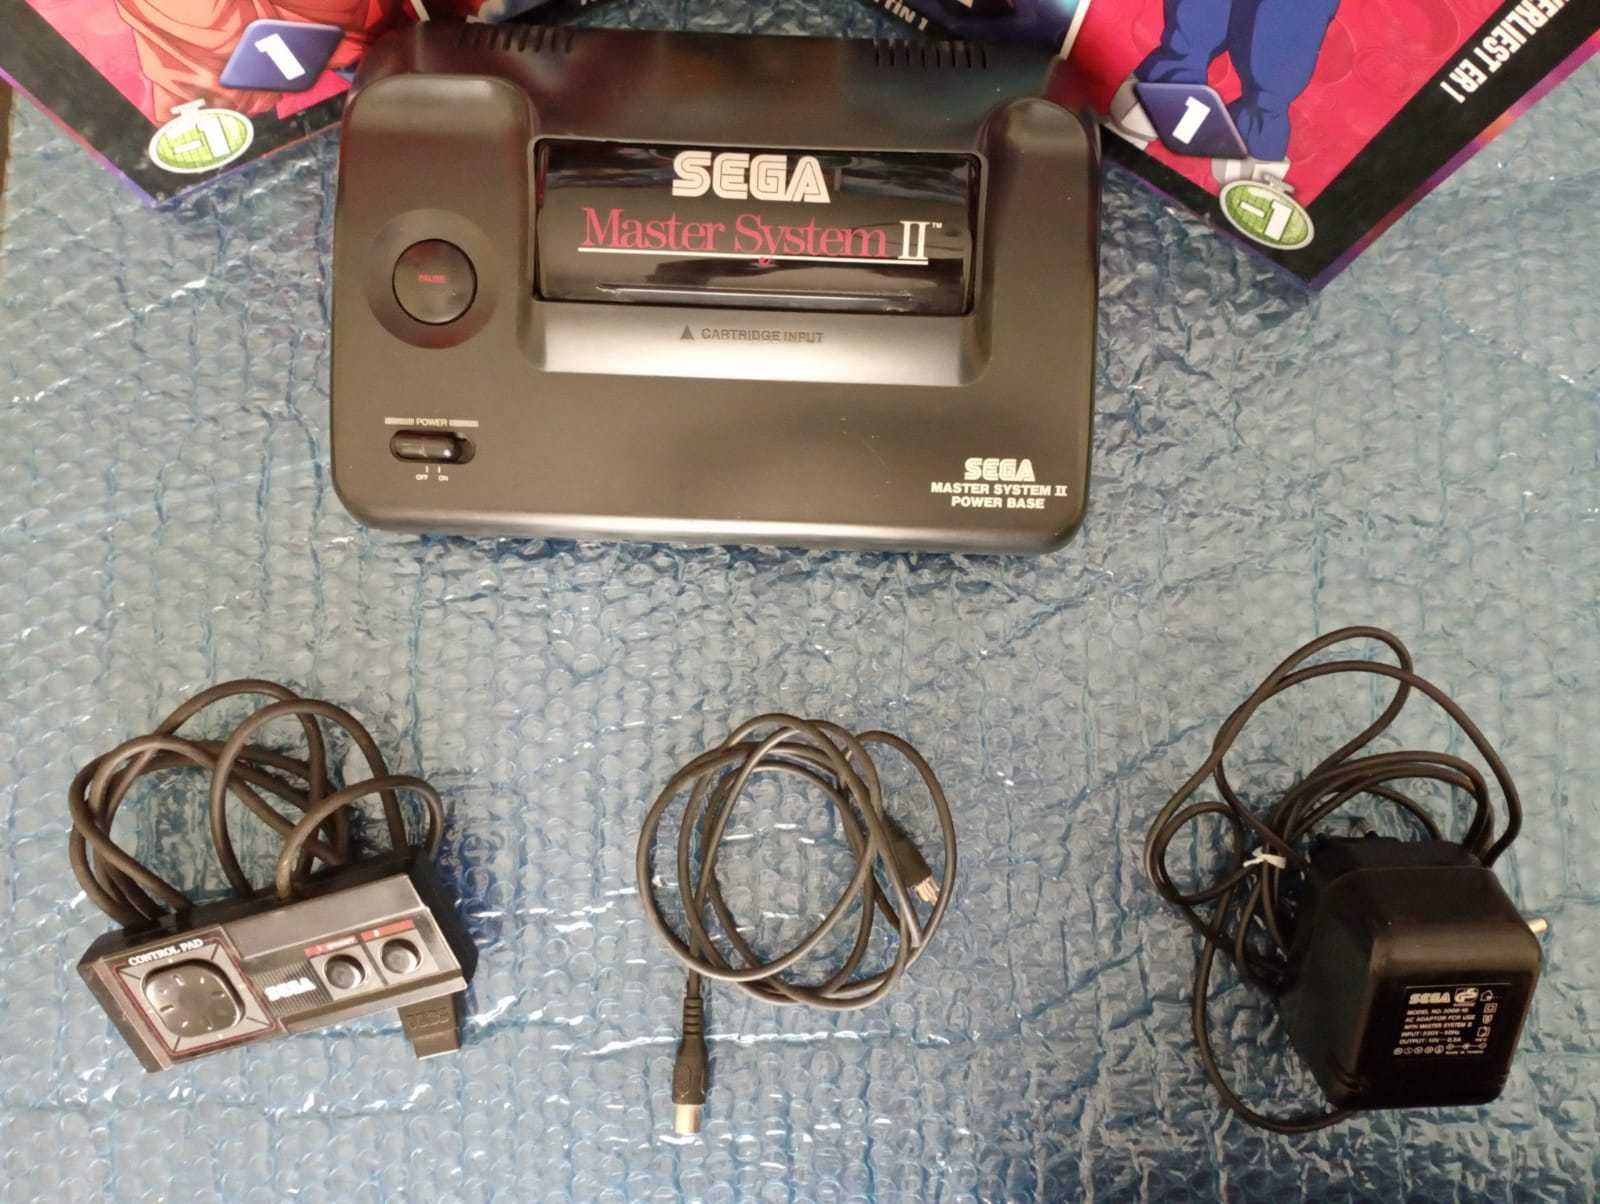 Consola Master System II completa